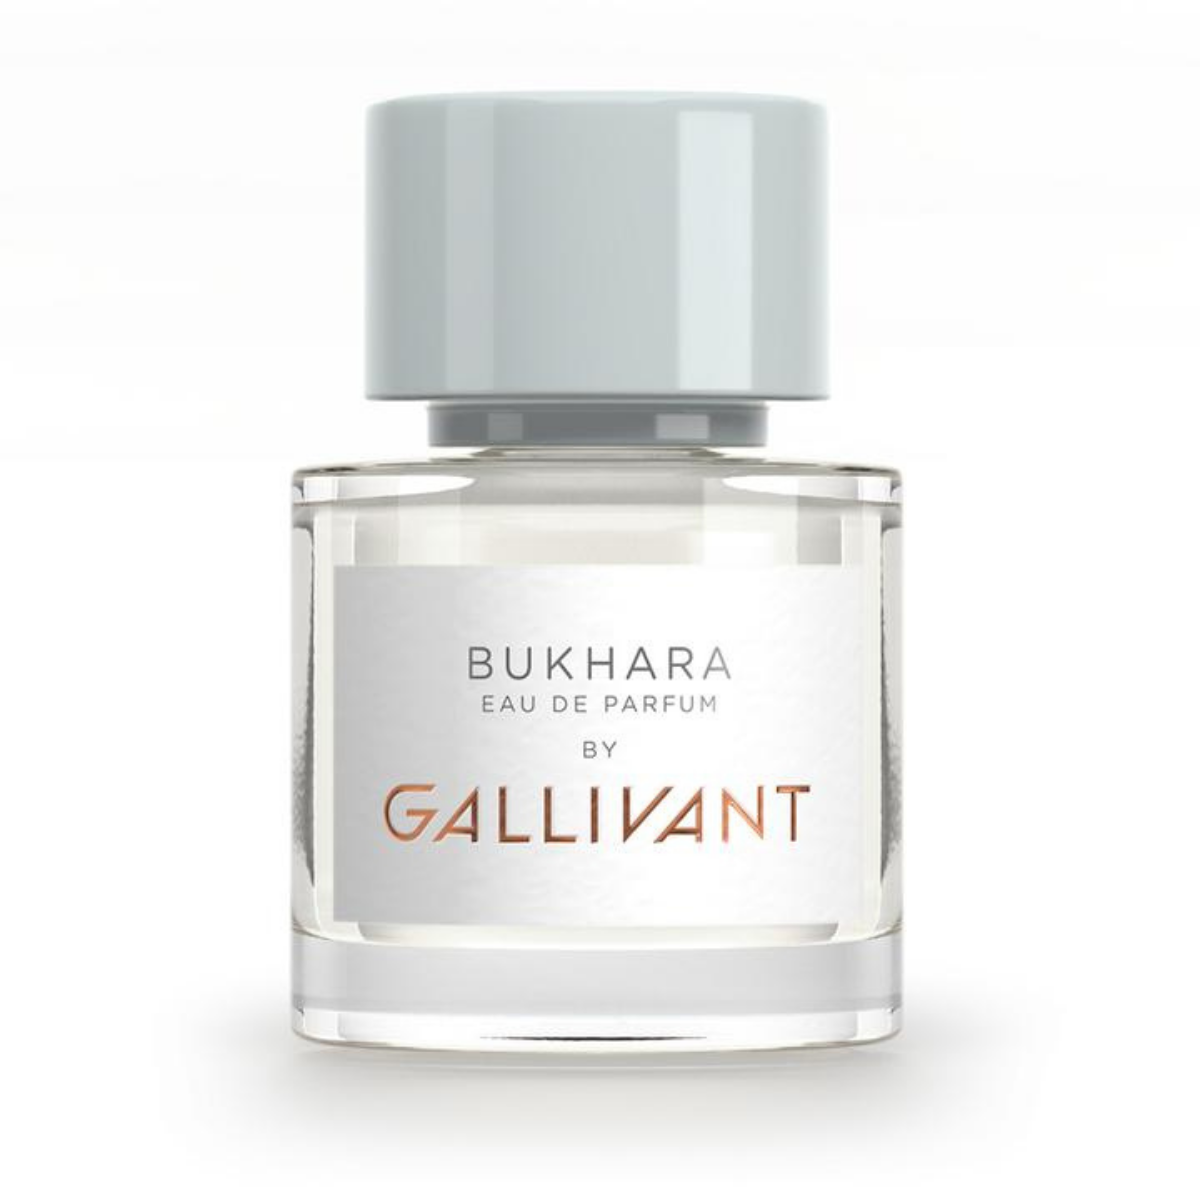 Primary image of Gallivant Bukhara Eau De Parfum